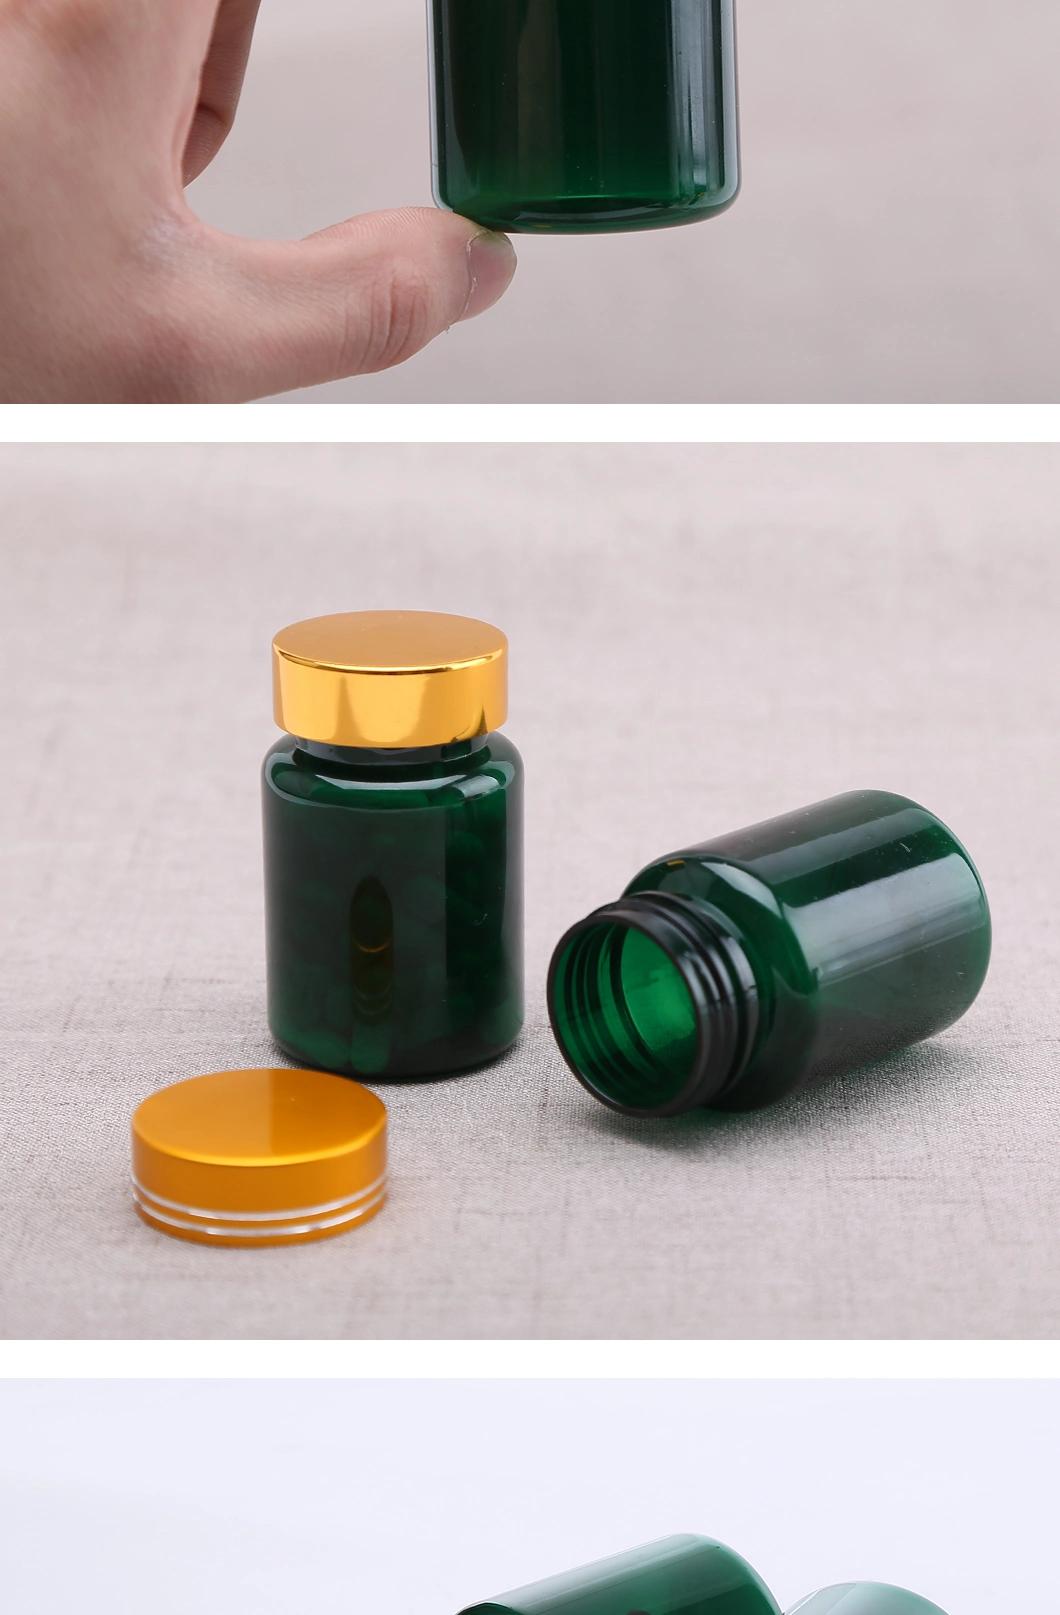 80ml Green Pet Plastic Medicine Capsule Health Care Packaging Bottle